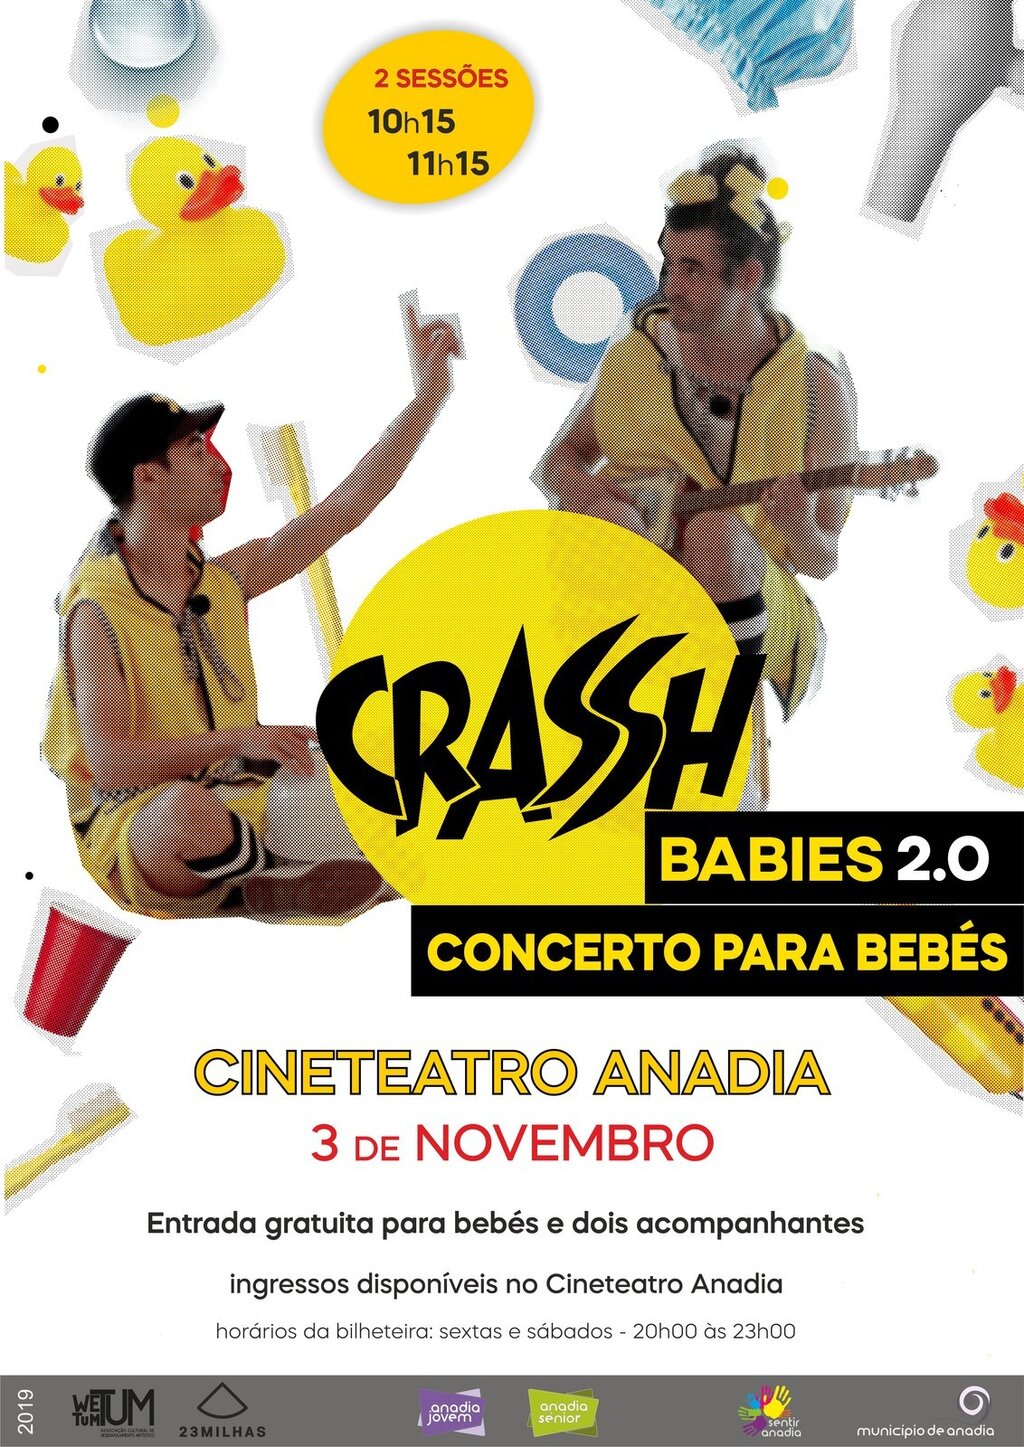 Crash Babies 2.0  - Concerto para Bebés